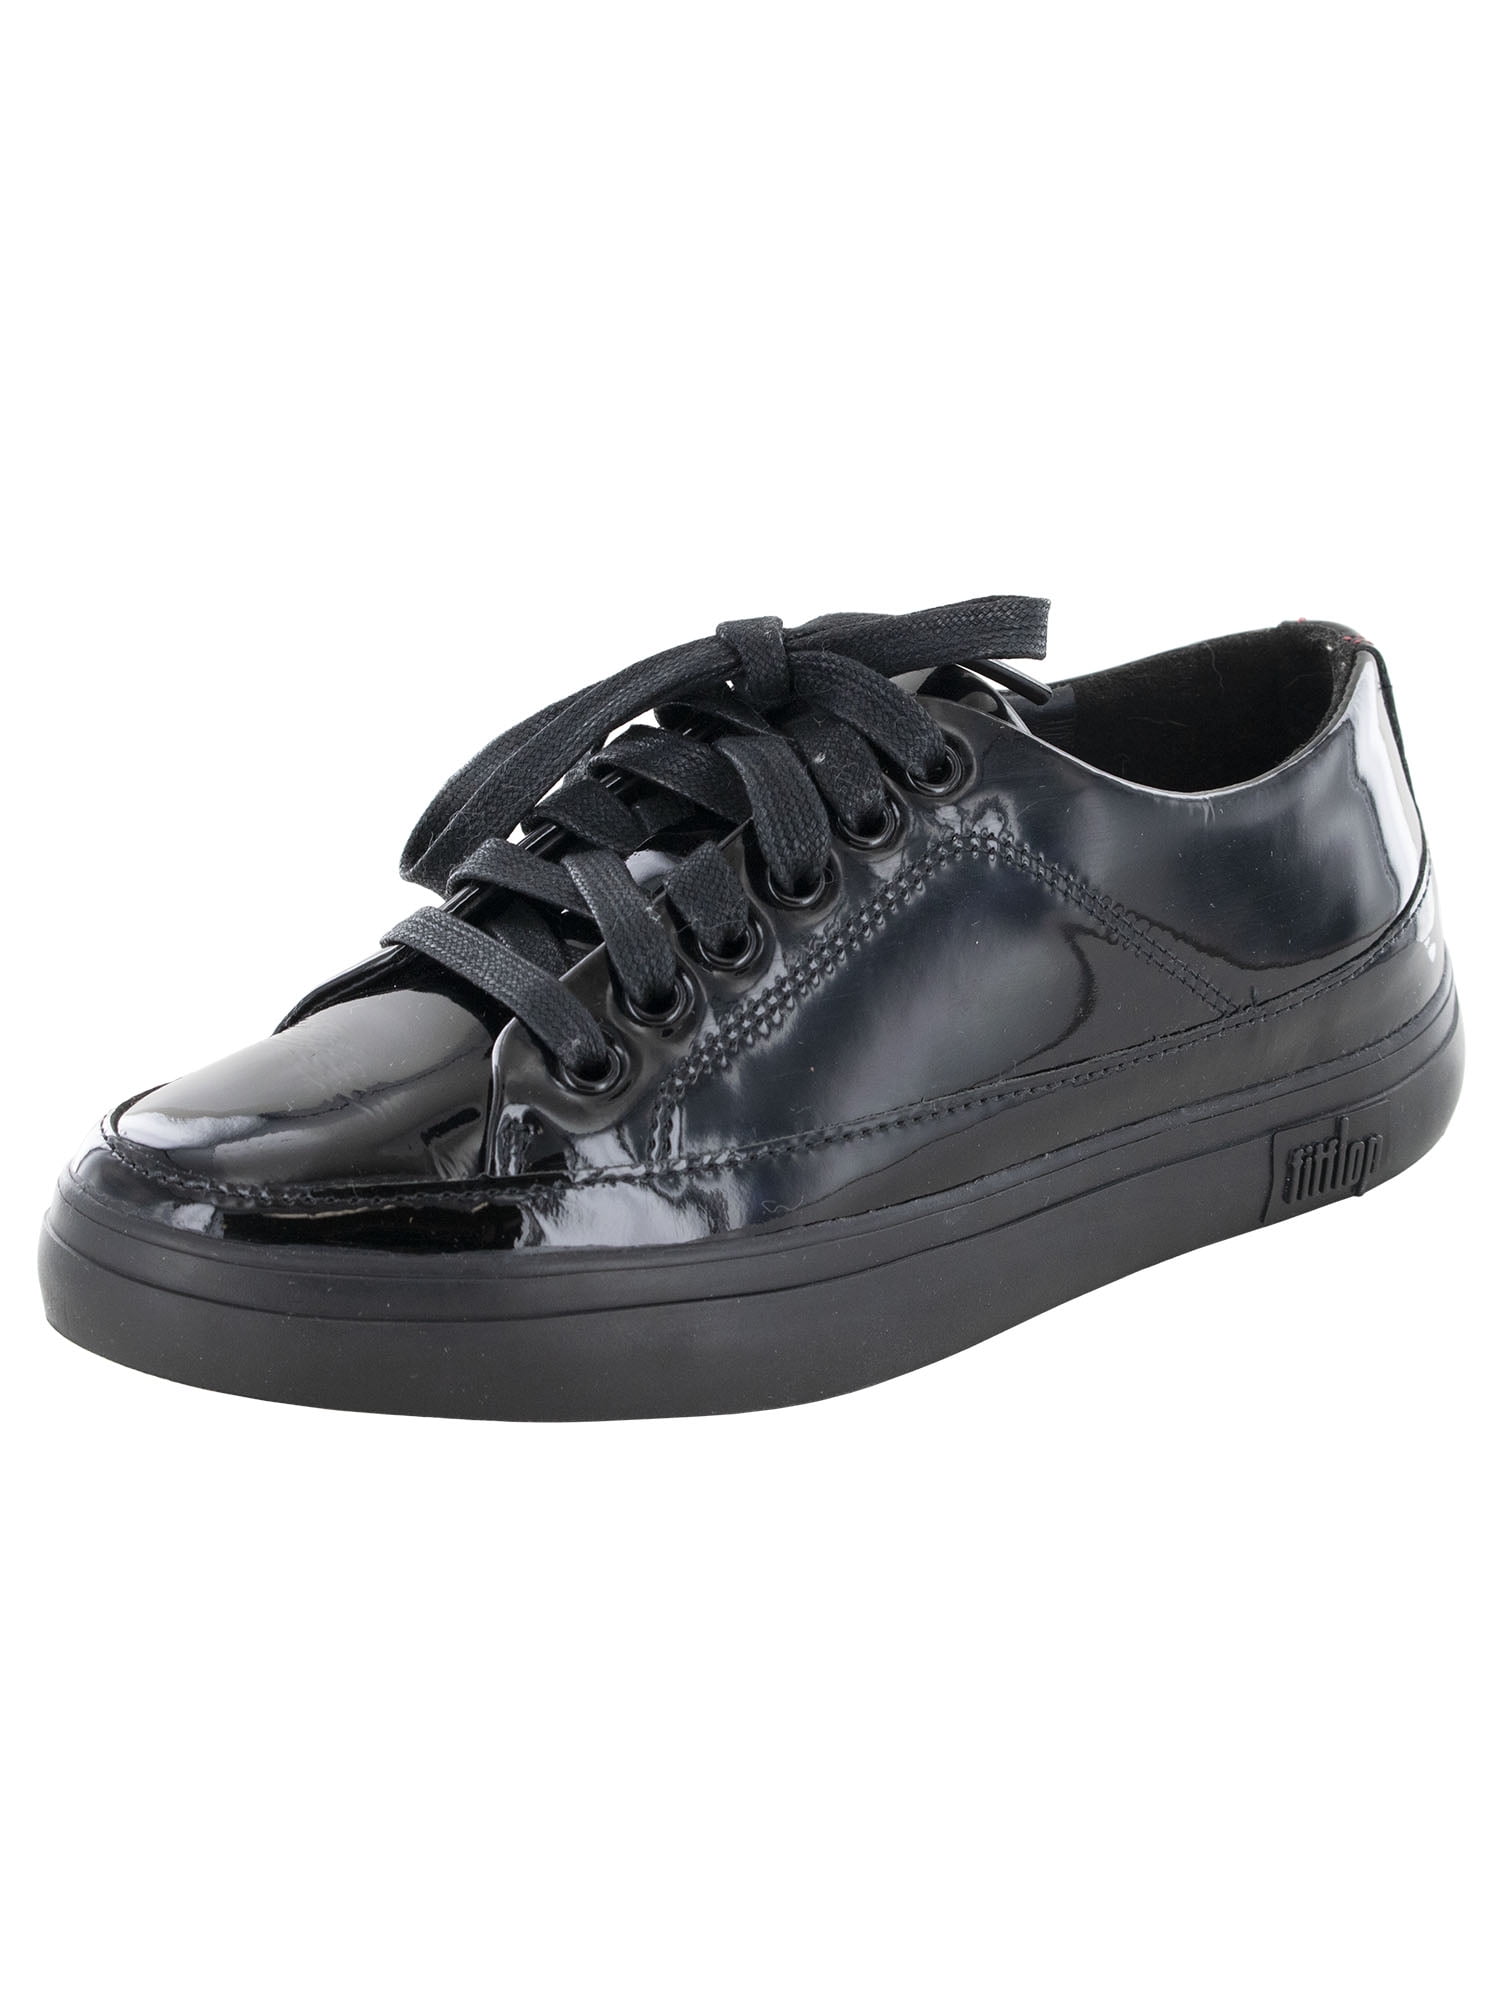 så meget Fancy affjedring Fitflop Womens Super T Patent Leather Sneaker Shoes, Black, US 5 -  Walmart.com